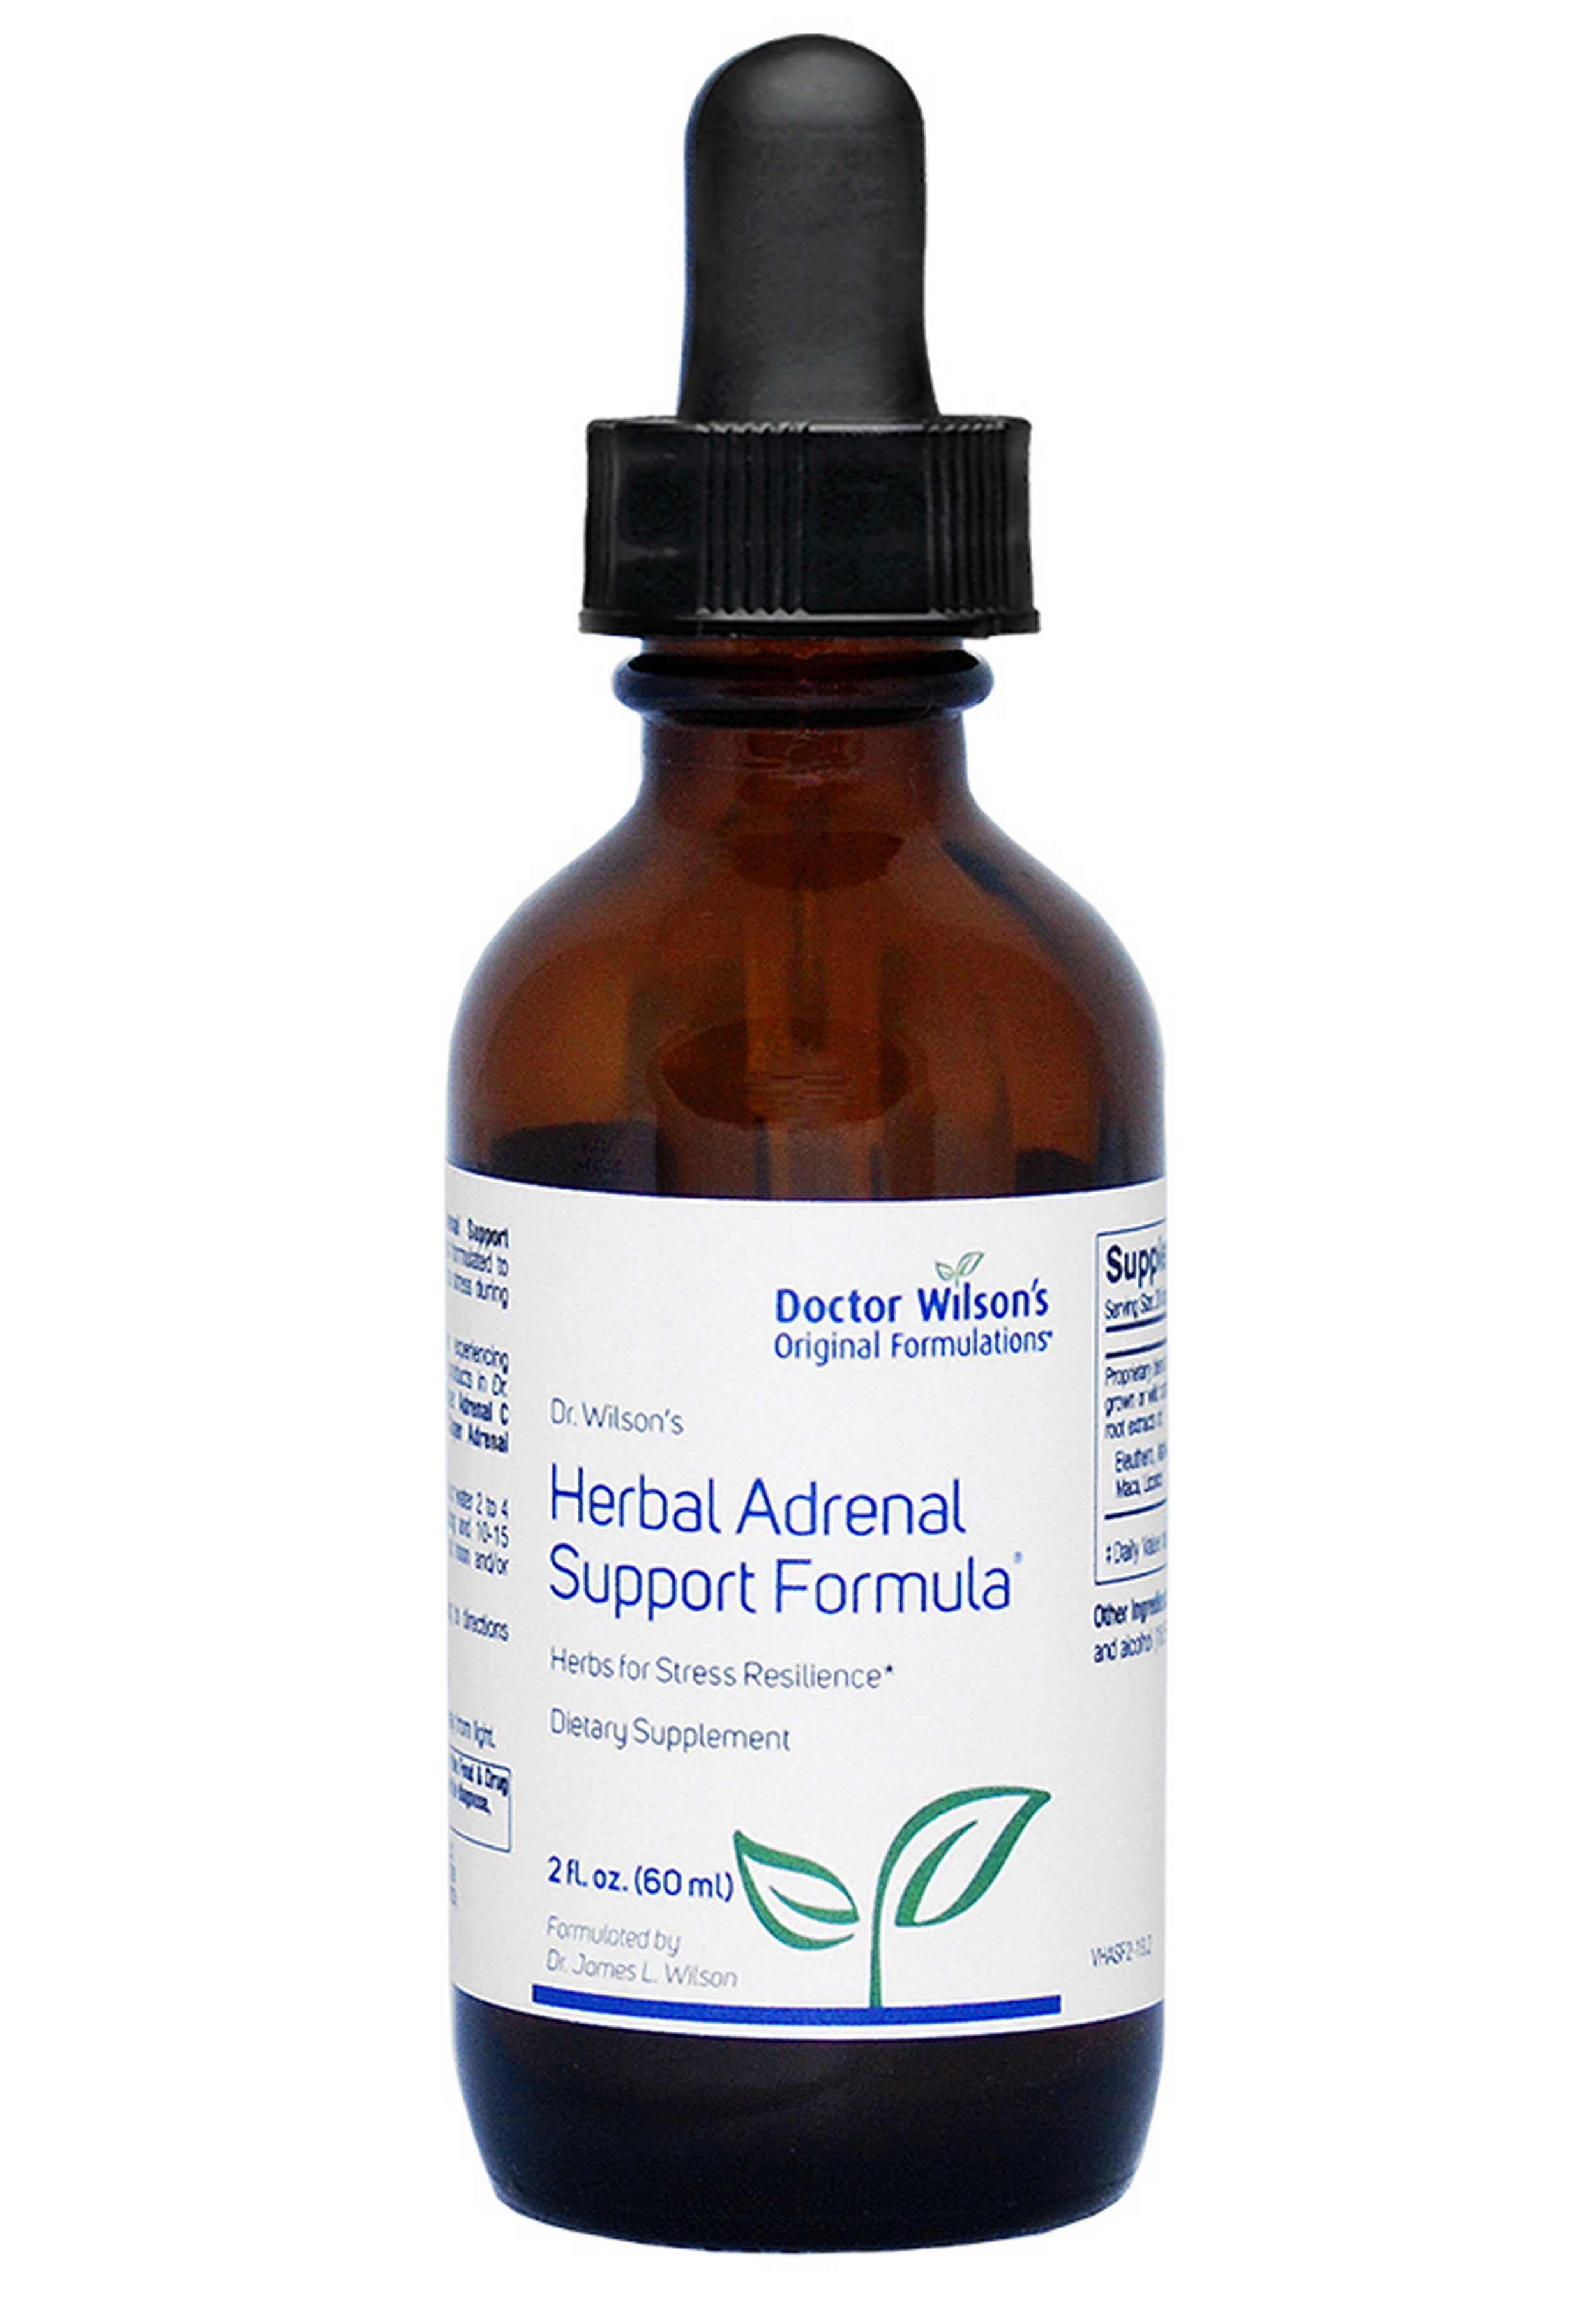 Doctor Wilson's Original Formulations Herbal Adrenal Support Formula